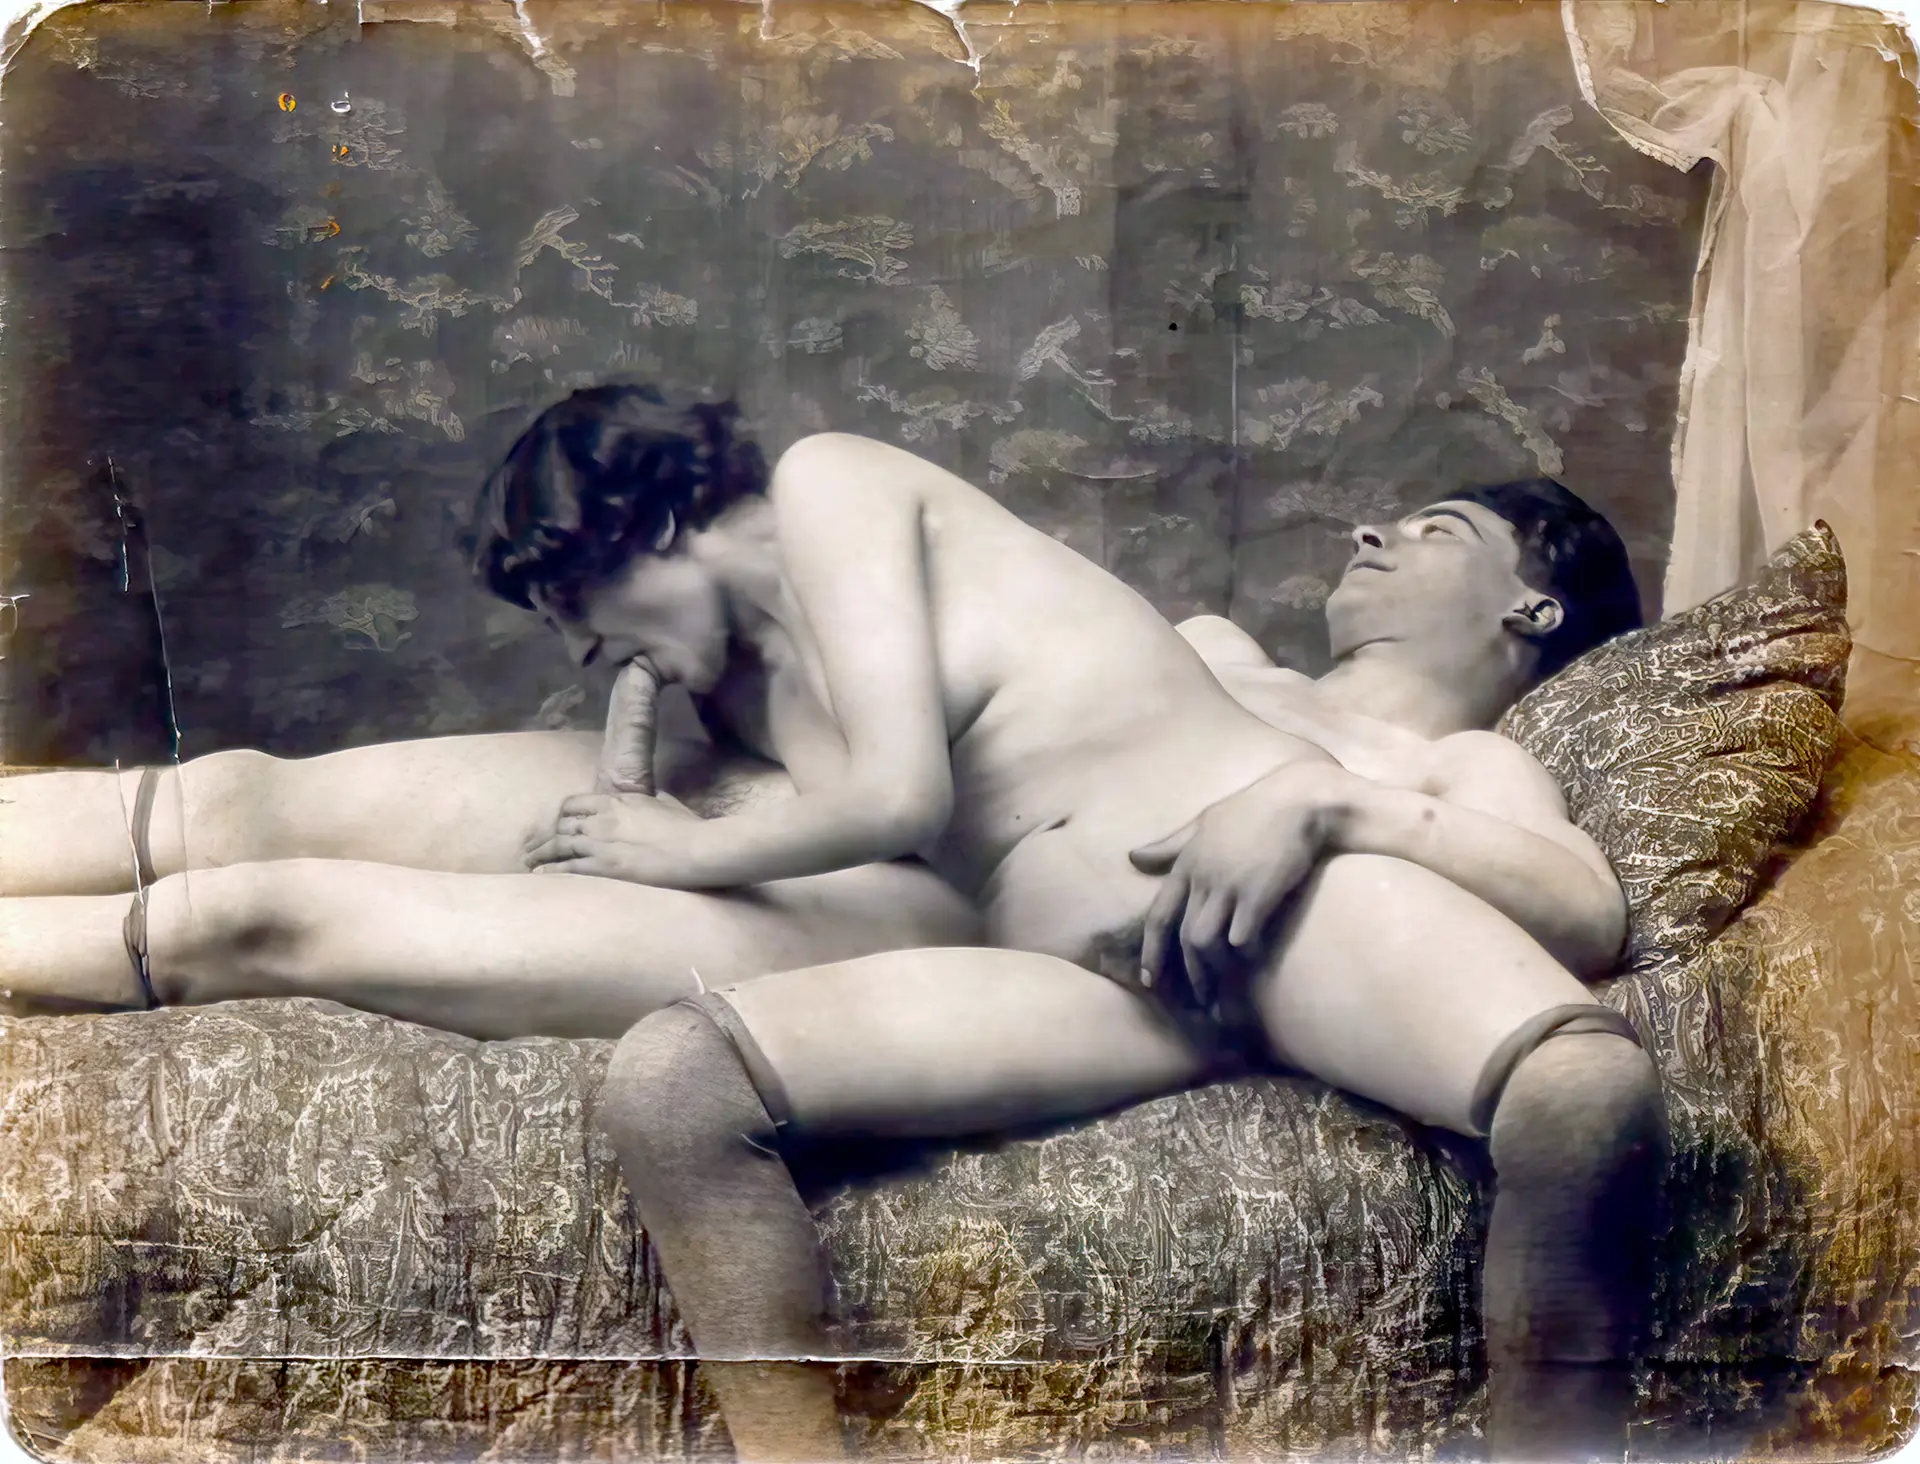 Oldest nude pics